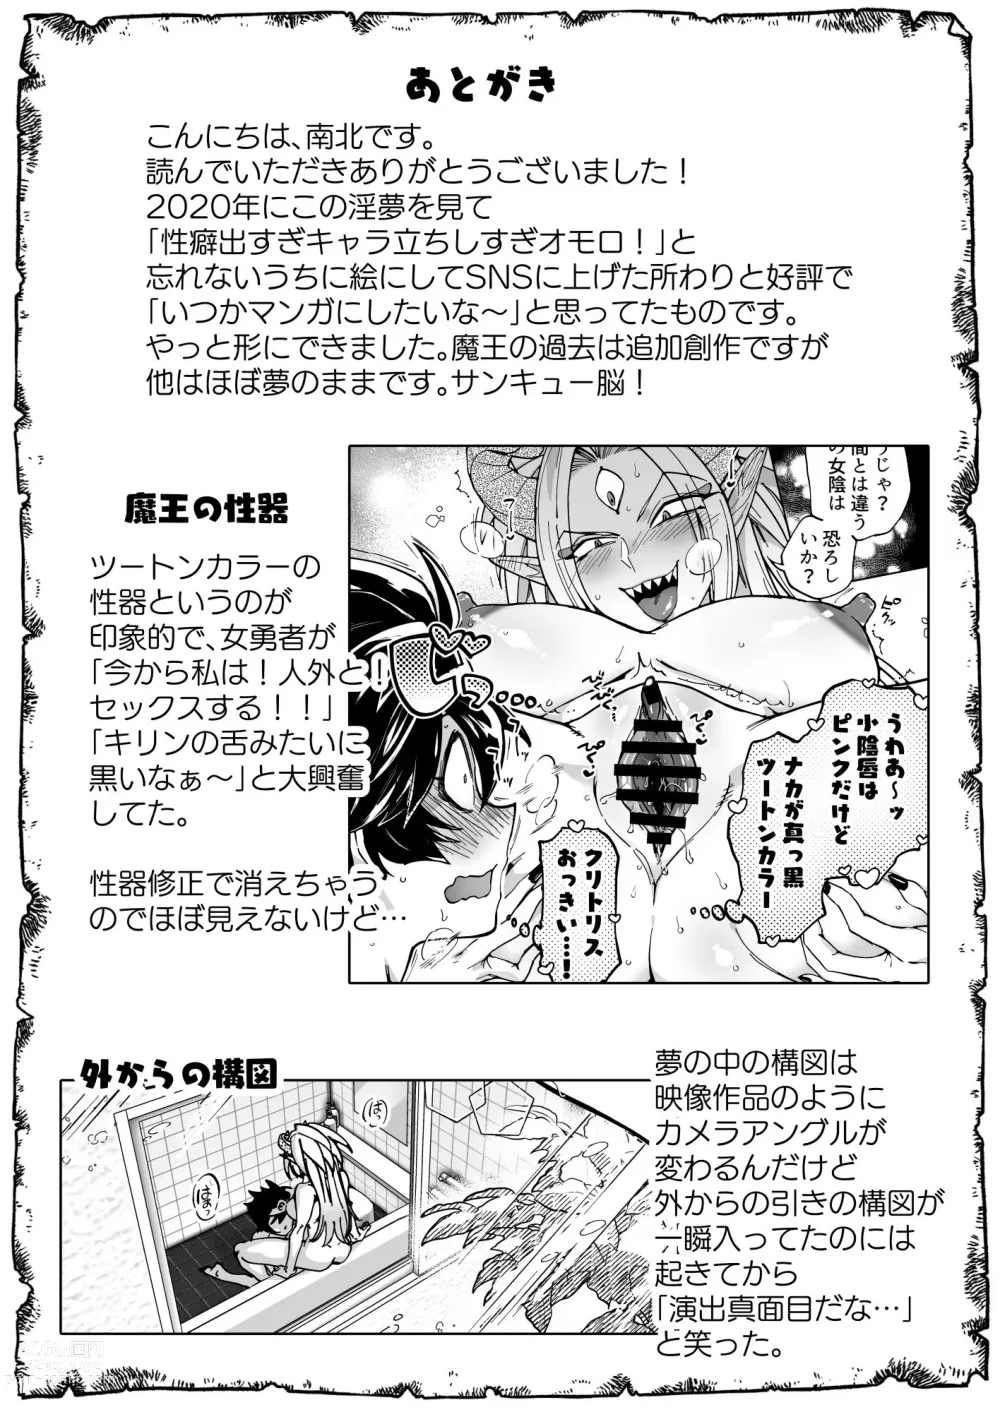 Page 39 of doujinshi 最终决战才见到对方正脸就恍神的勇者与魔王